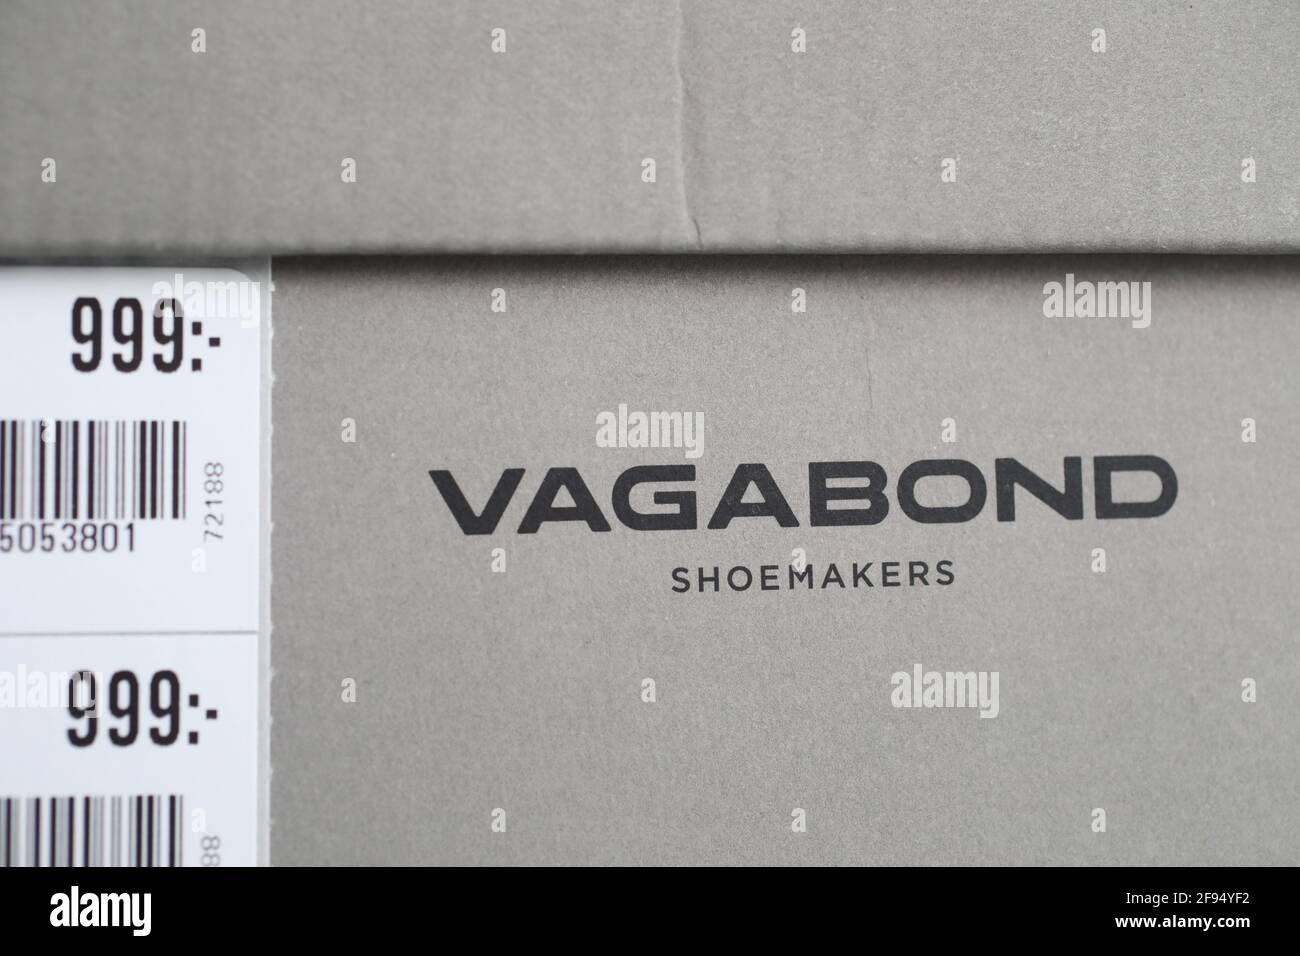 Vagabond, shoe company Stock - Alamy